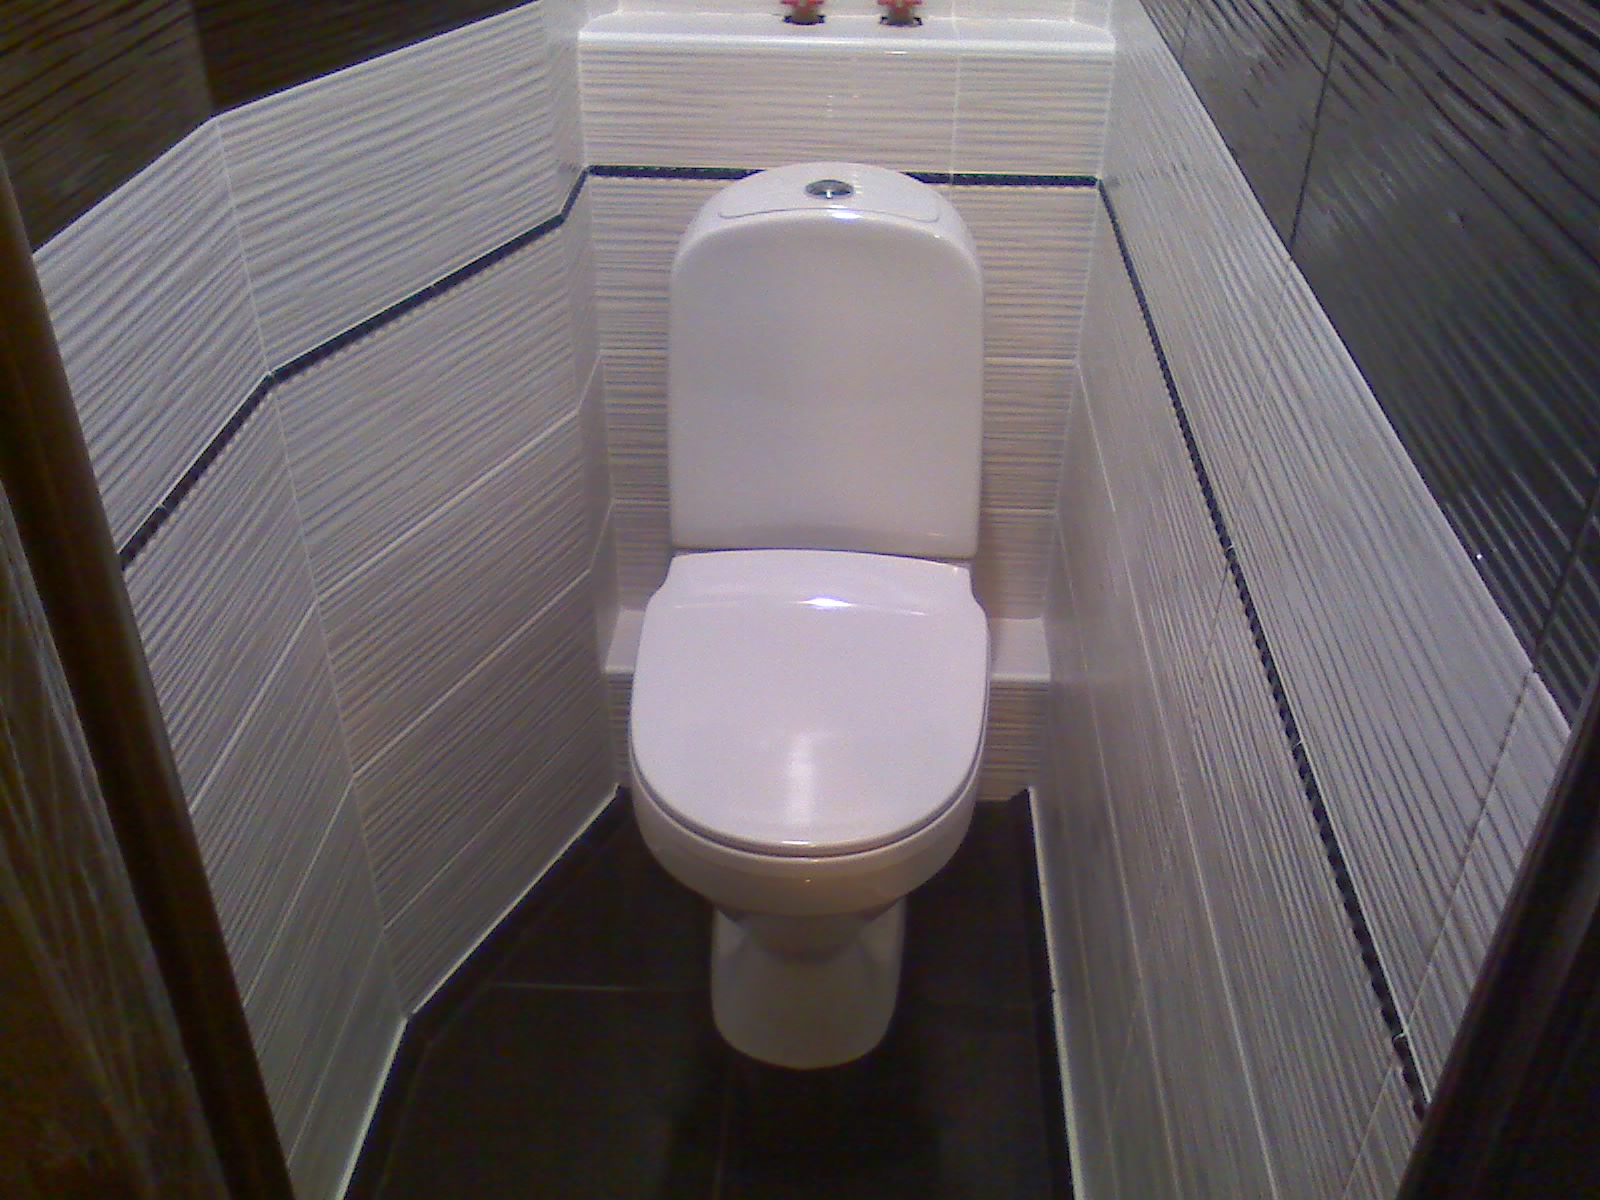 Ремонт туалета пвх. Отделка туалета панелями. Туалет отделанный панелями. Отделка туалета пластиком. Отделка туалета пластиковыми панелями.